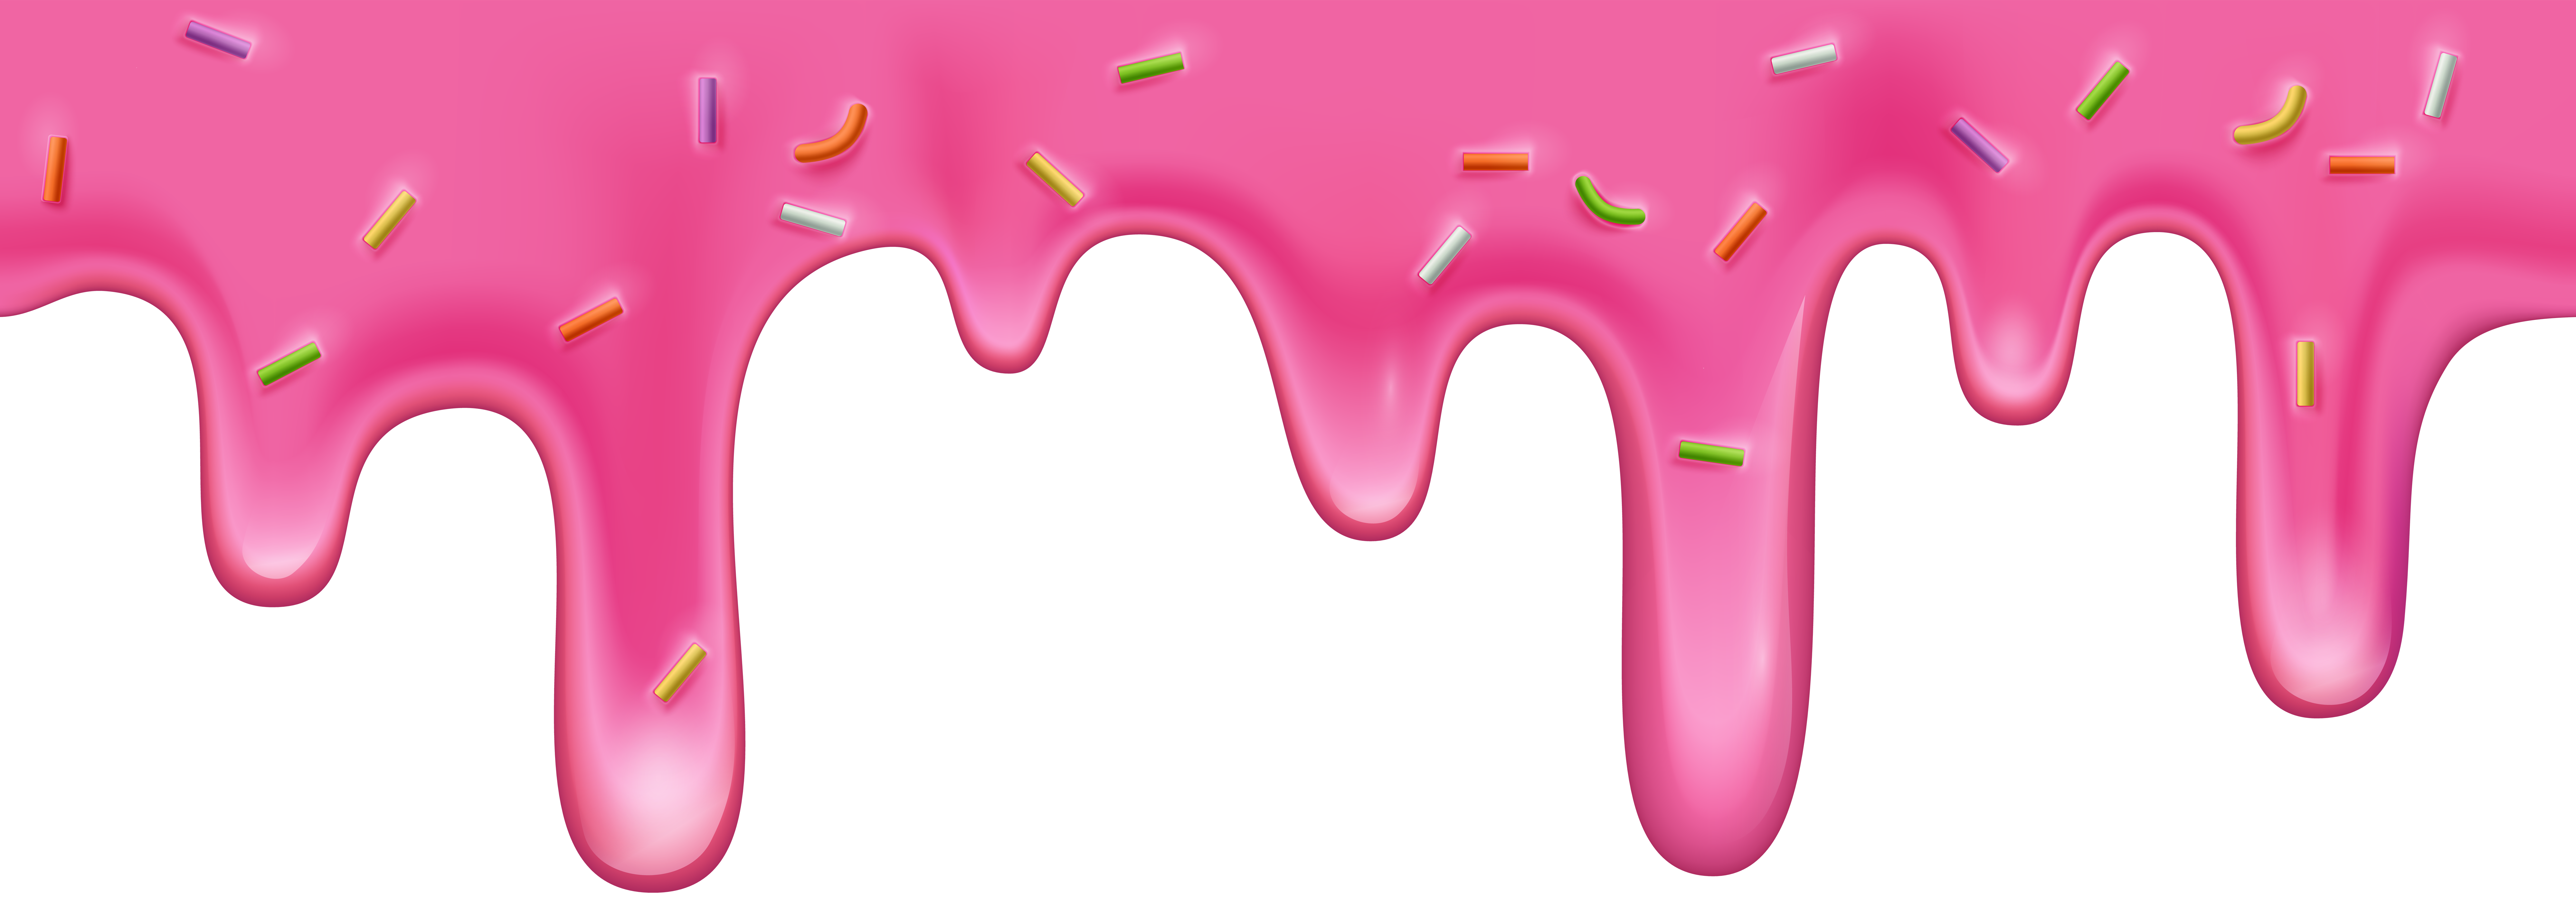 Pink Cream Drip Clip Art Image | Gallery Yopriceville - High-Quality ...